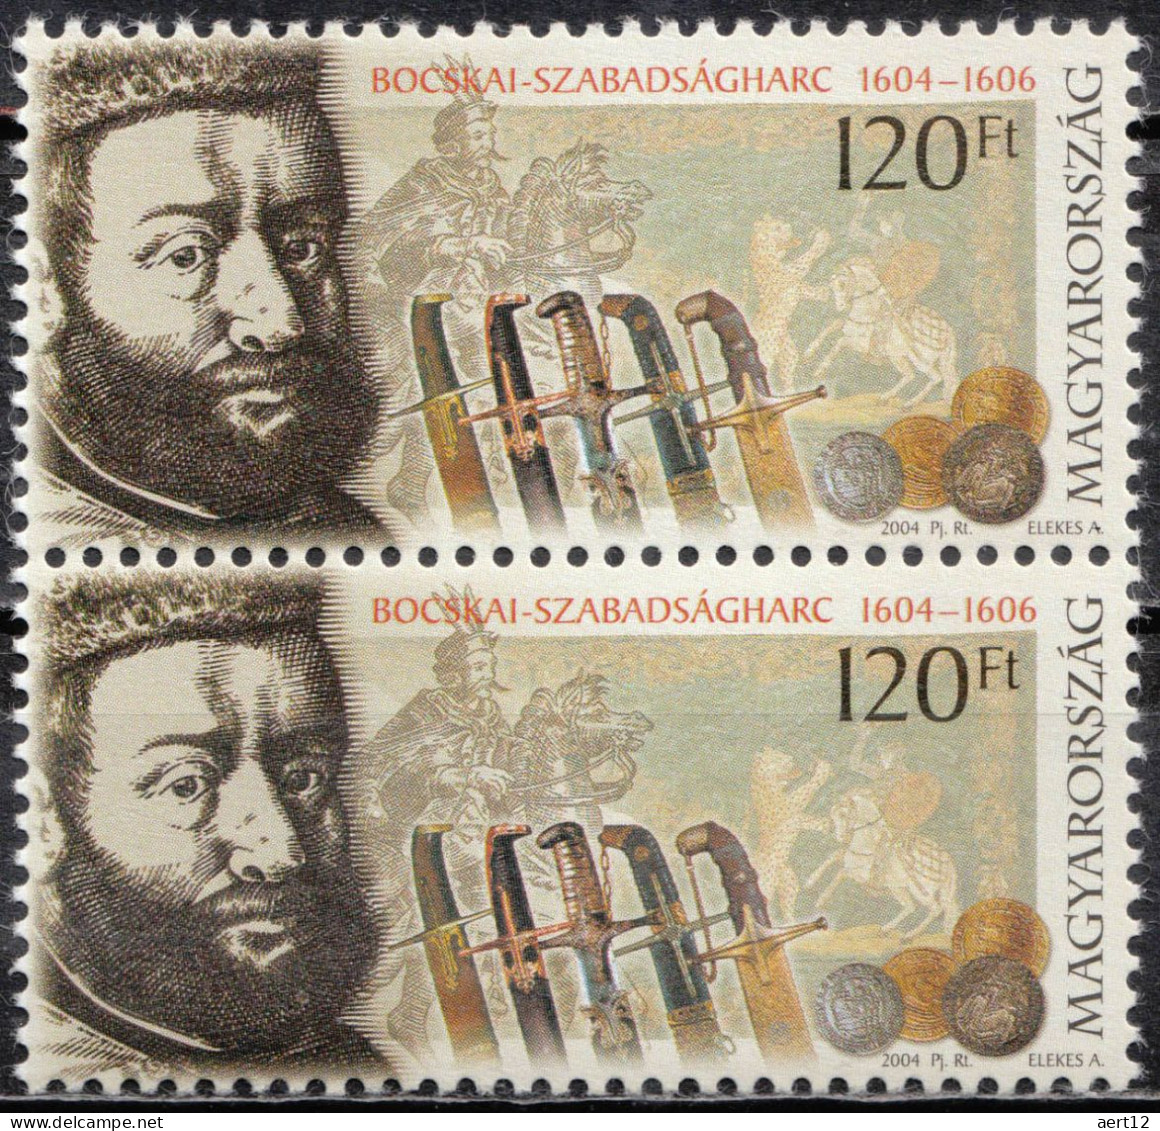 2004, Hungary, Bocskai, Anniversaries And Jubilees, Battle, Coins, Horses, 2 Stamps, MNH(**), HU 4954x2 - Ongebruikt